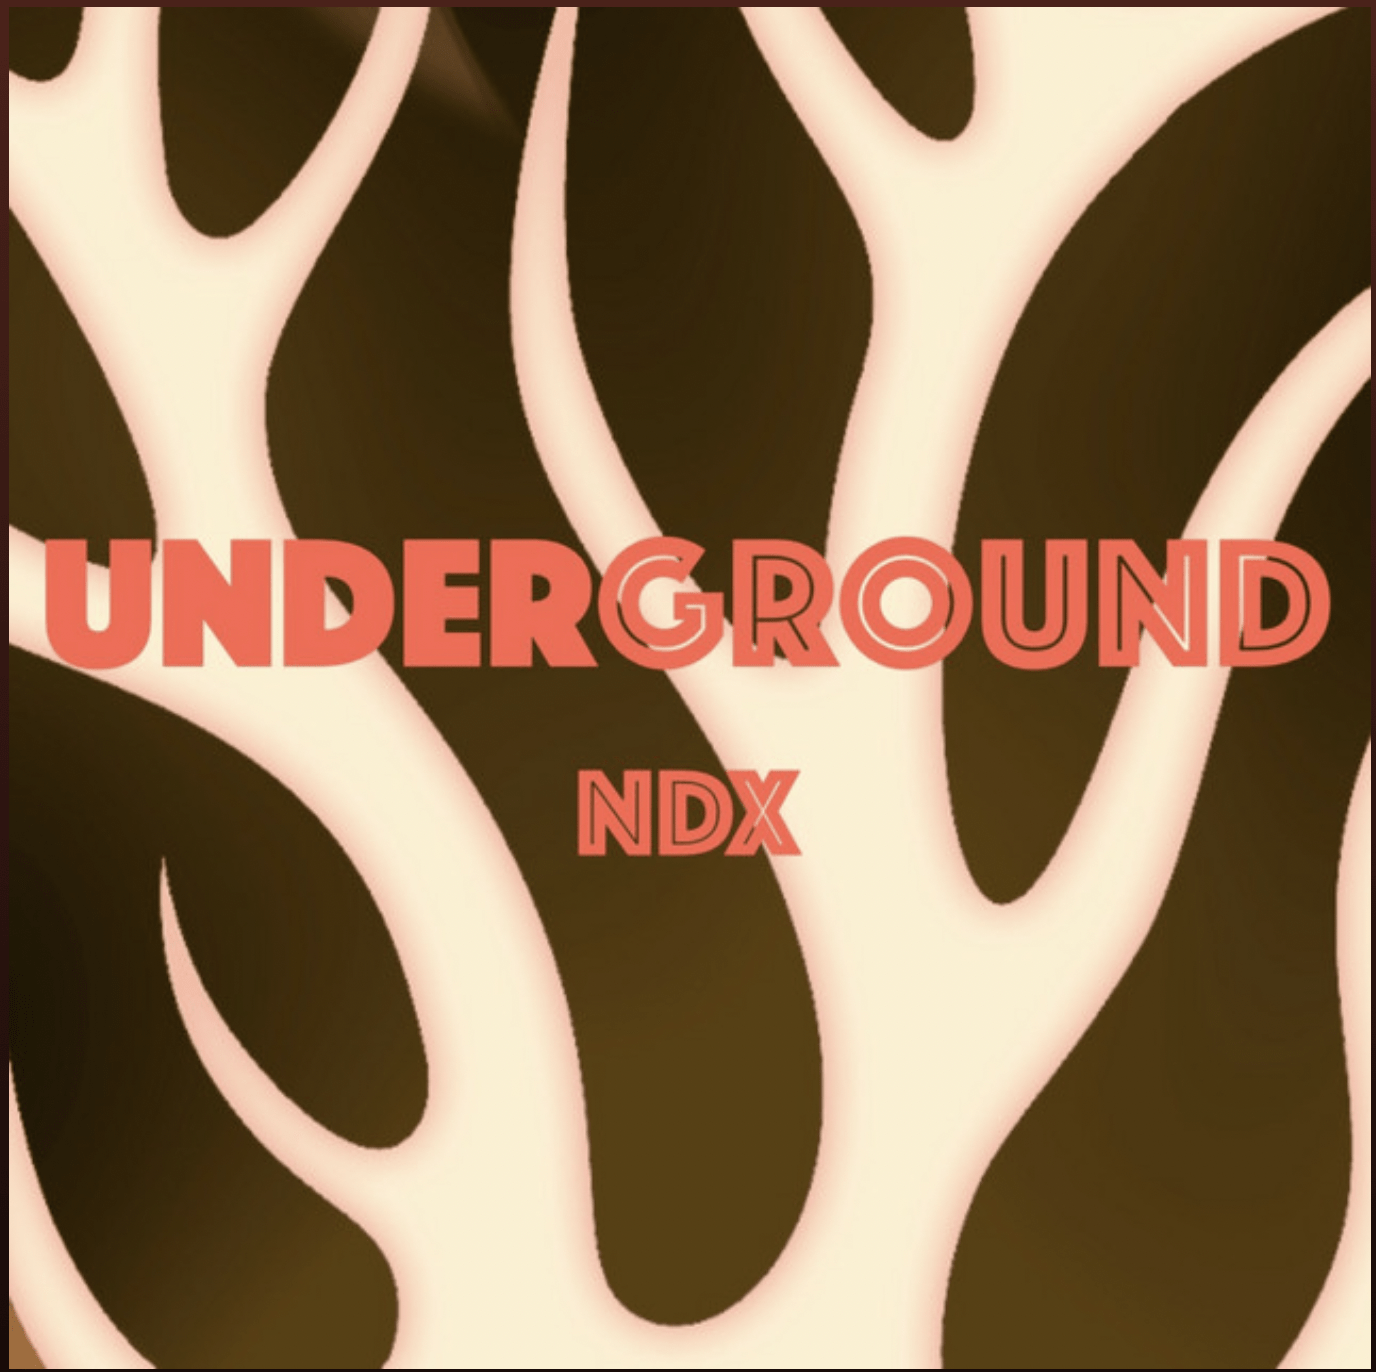 Underground (Original Single)By Near Death Experience (NDX)